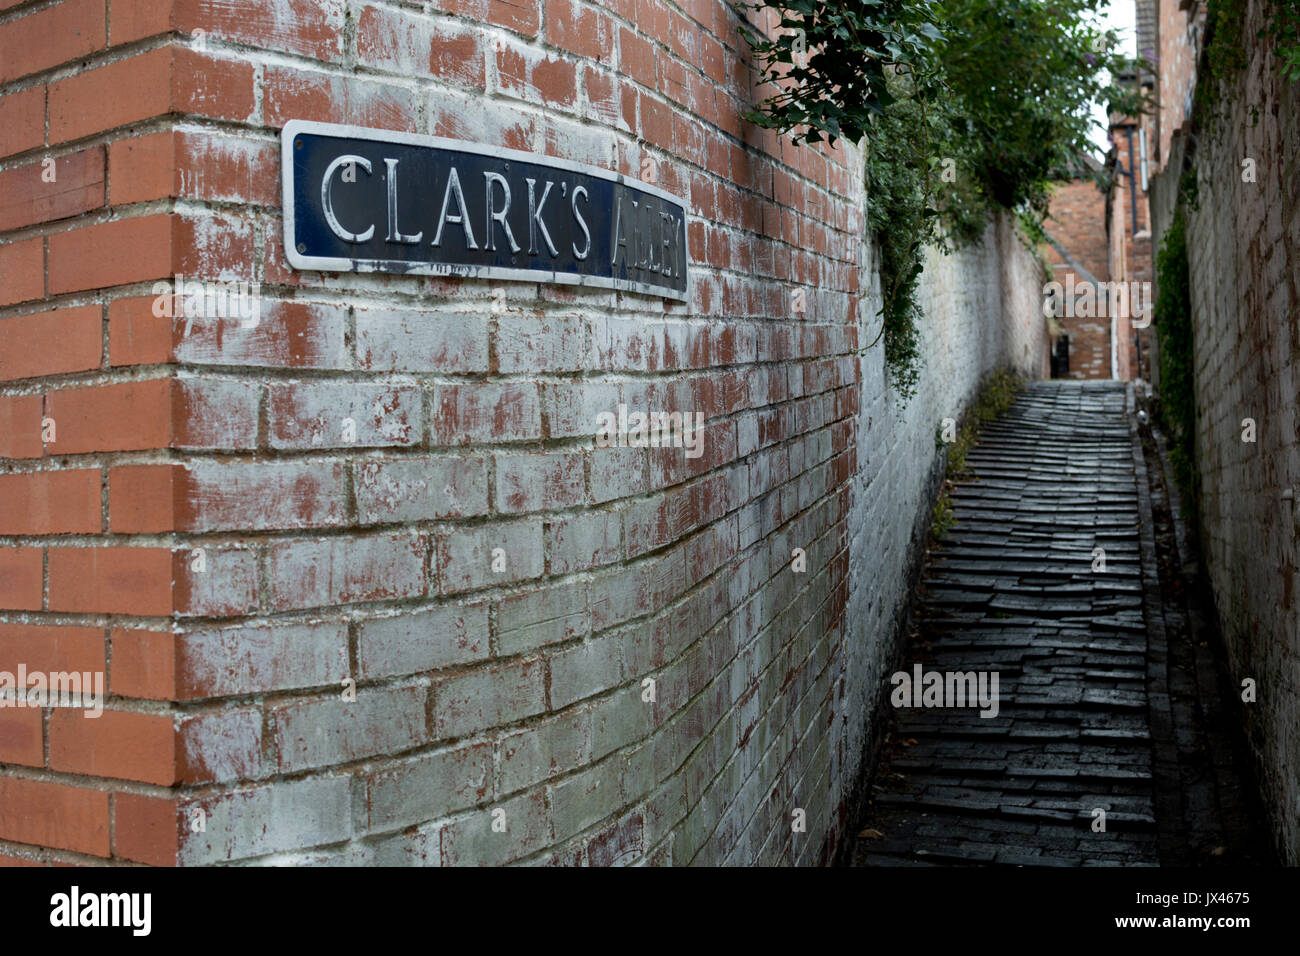 Clark's Alley, Gloucester, Gloucestershire, England, UK Banque D'Images